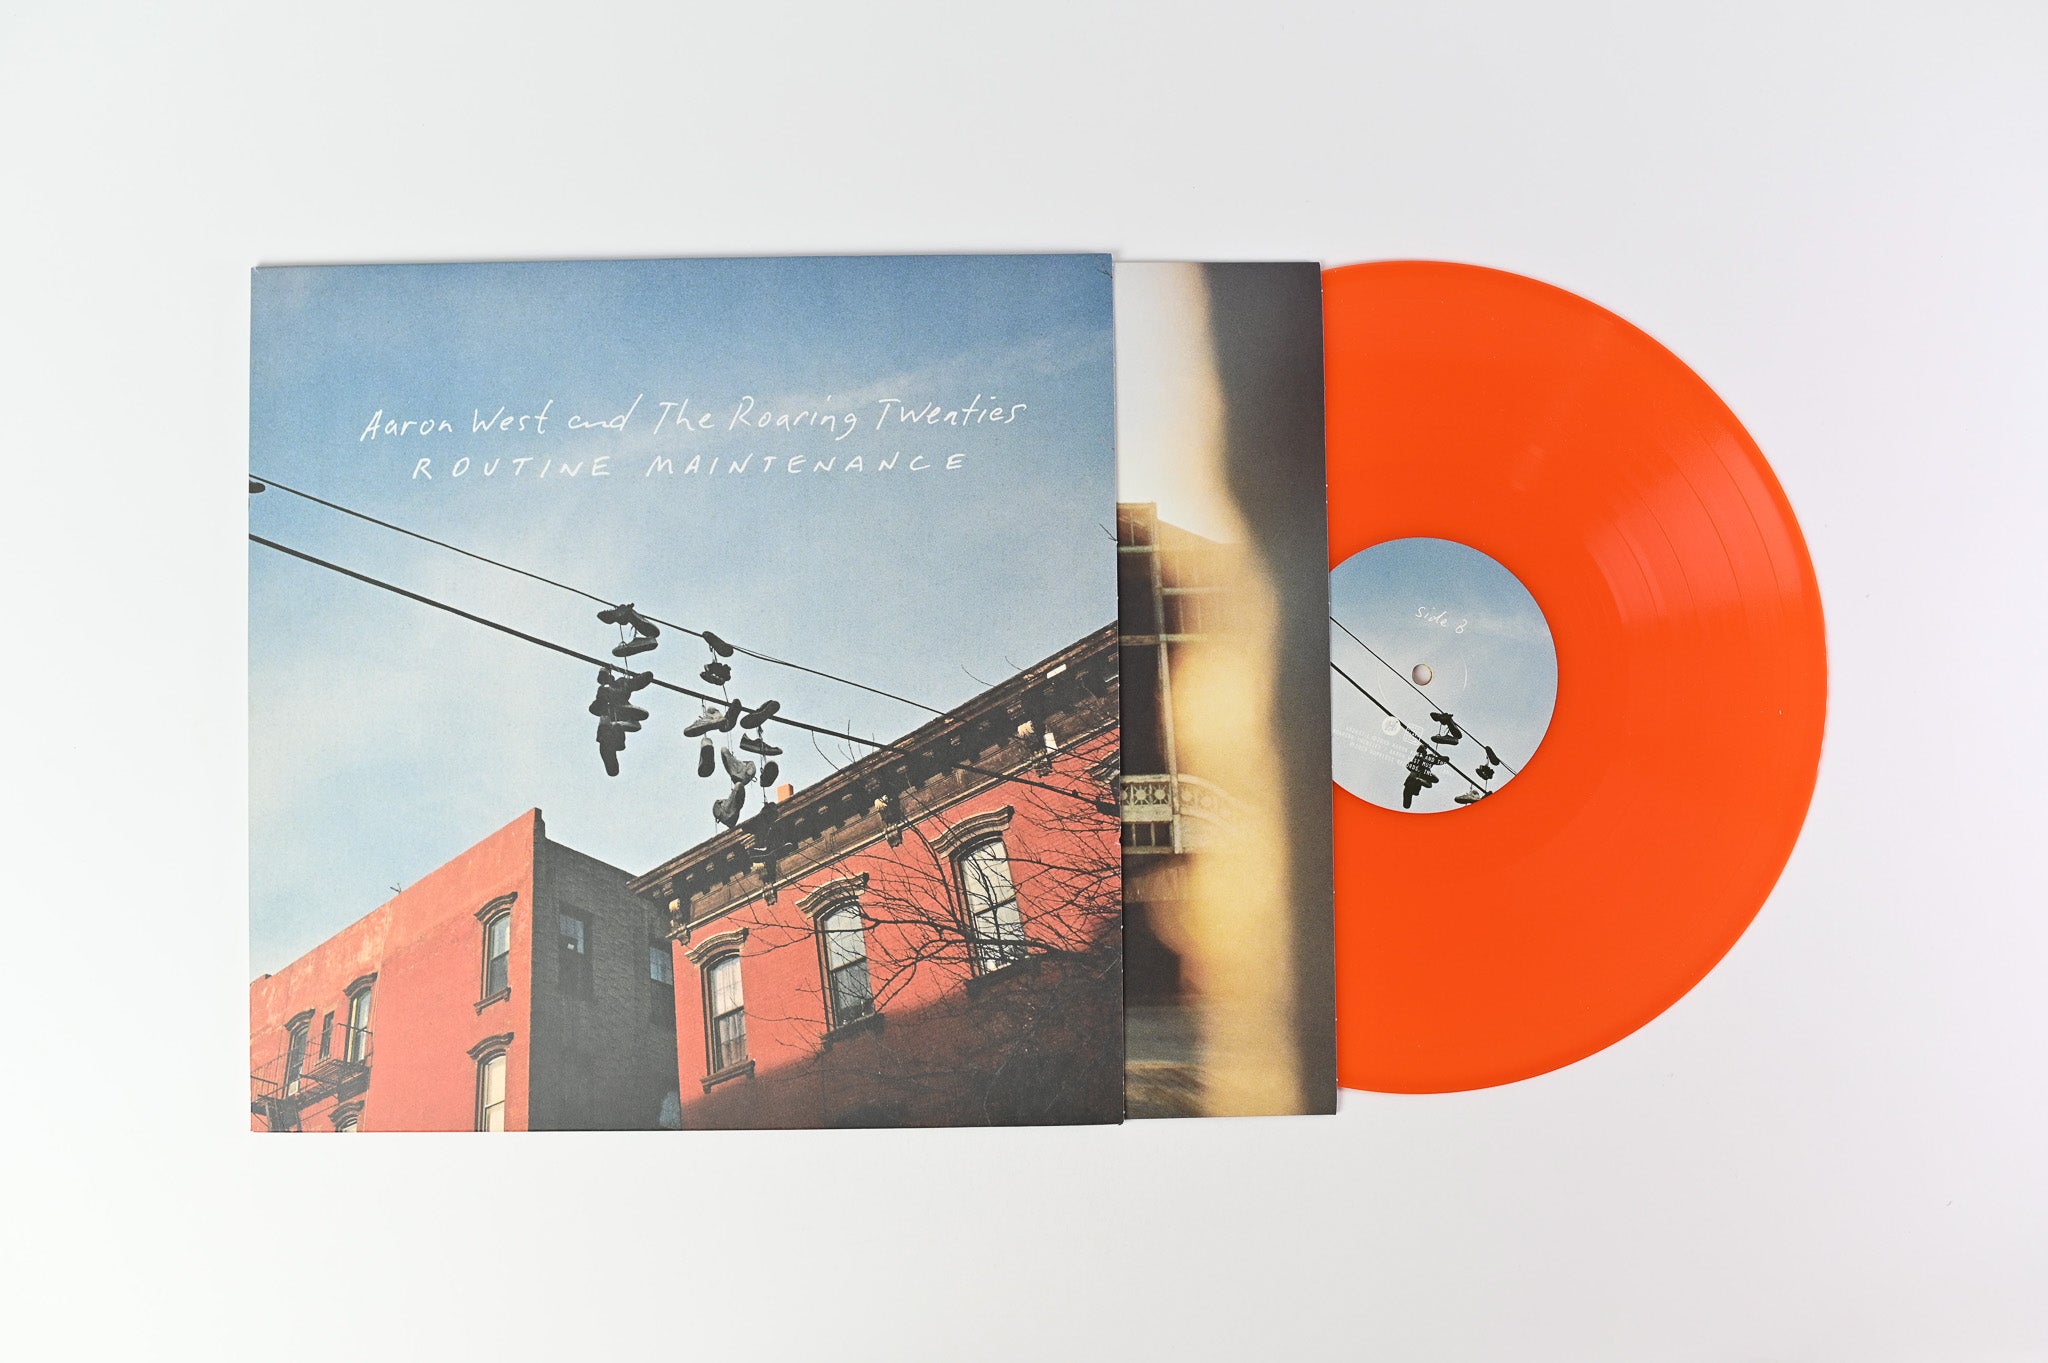 Aaron West And The Roaring Twenties - Routine Maintenance on Hopeless Records Orange Vinyl